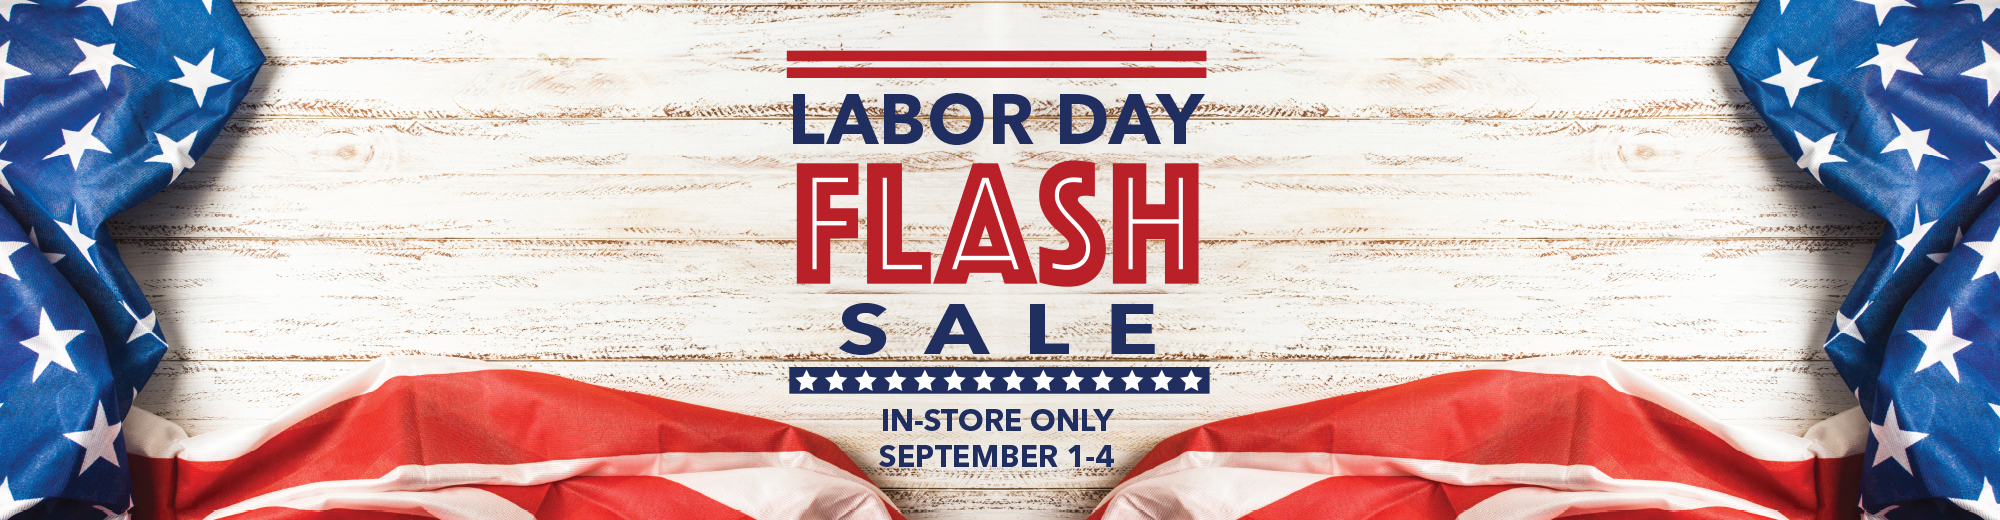 Labor Day Flash Sale